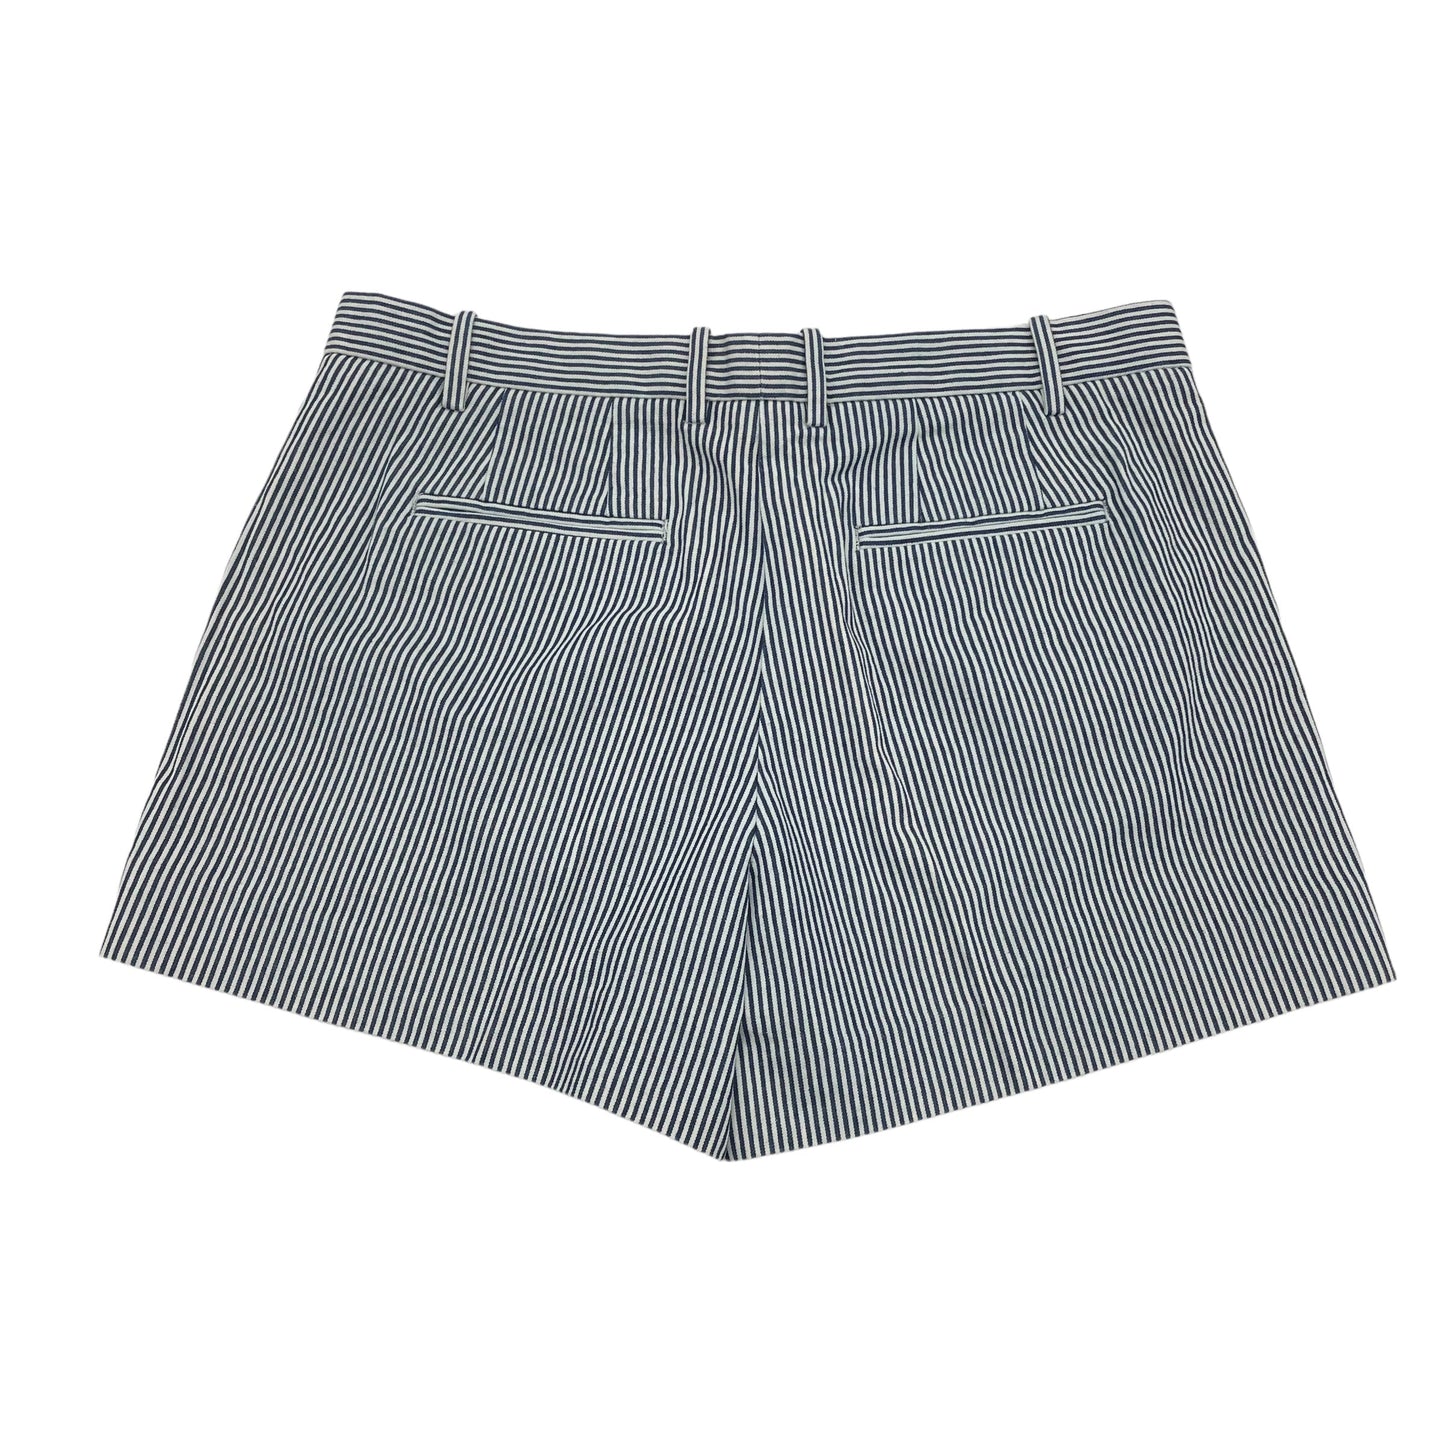 Shorts By Gap  Size: 10petite